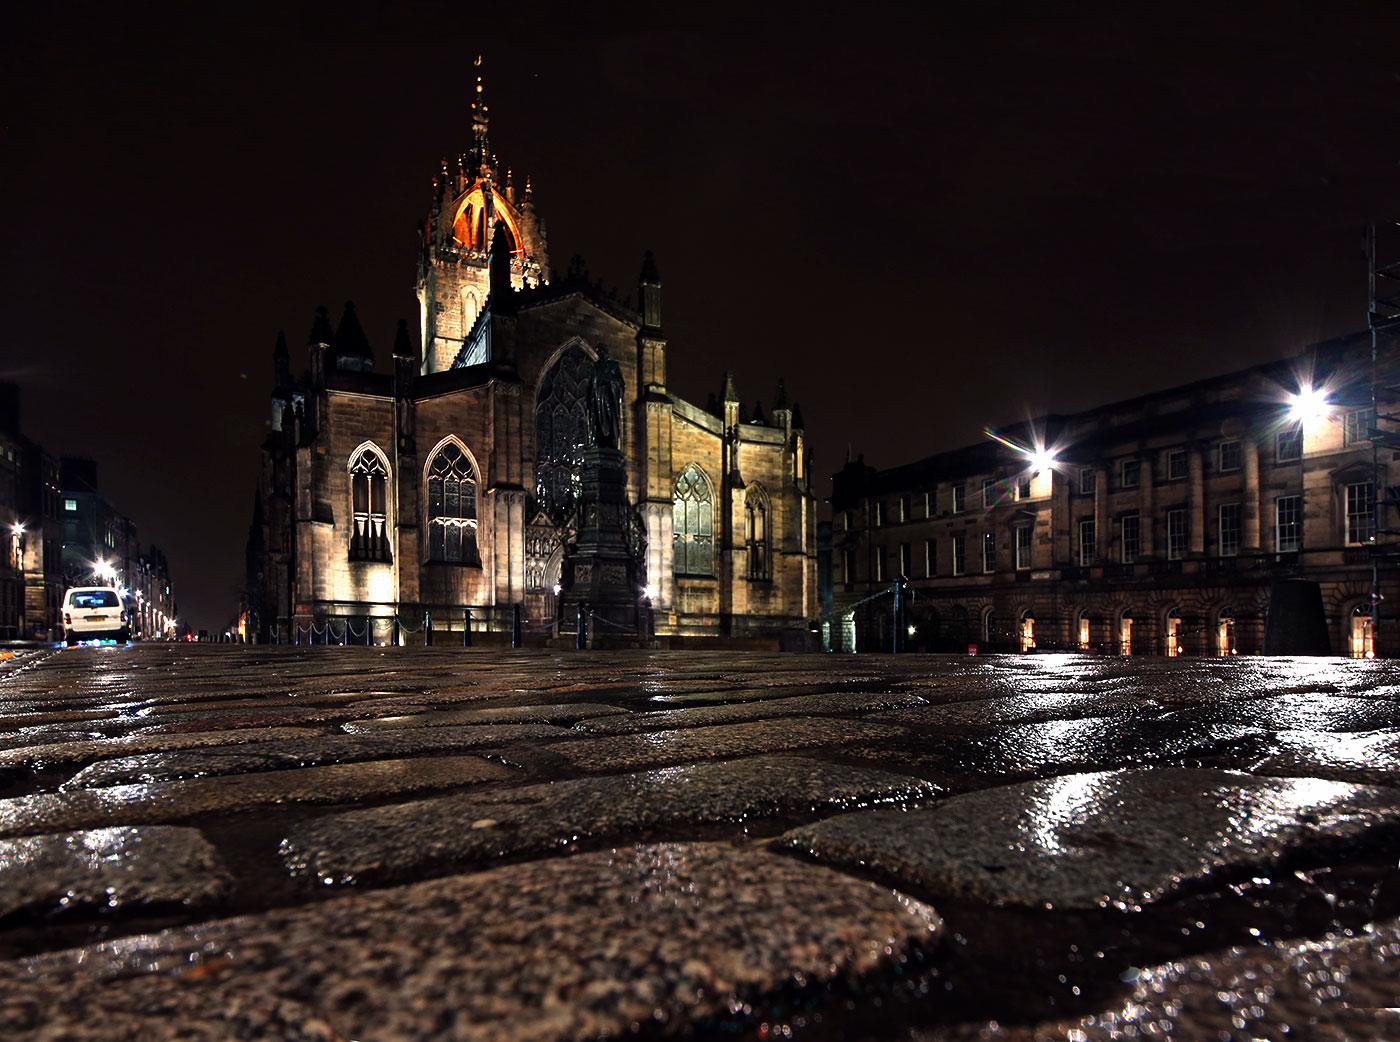 St Giles Church, High Street, Edinburgh  -  Wet Weather, January 2014